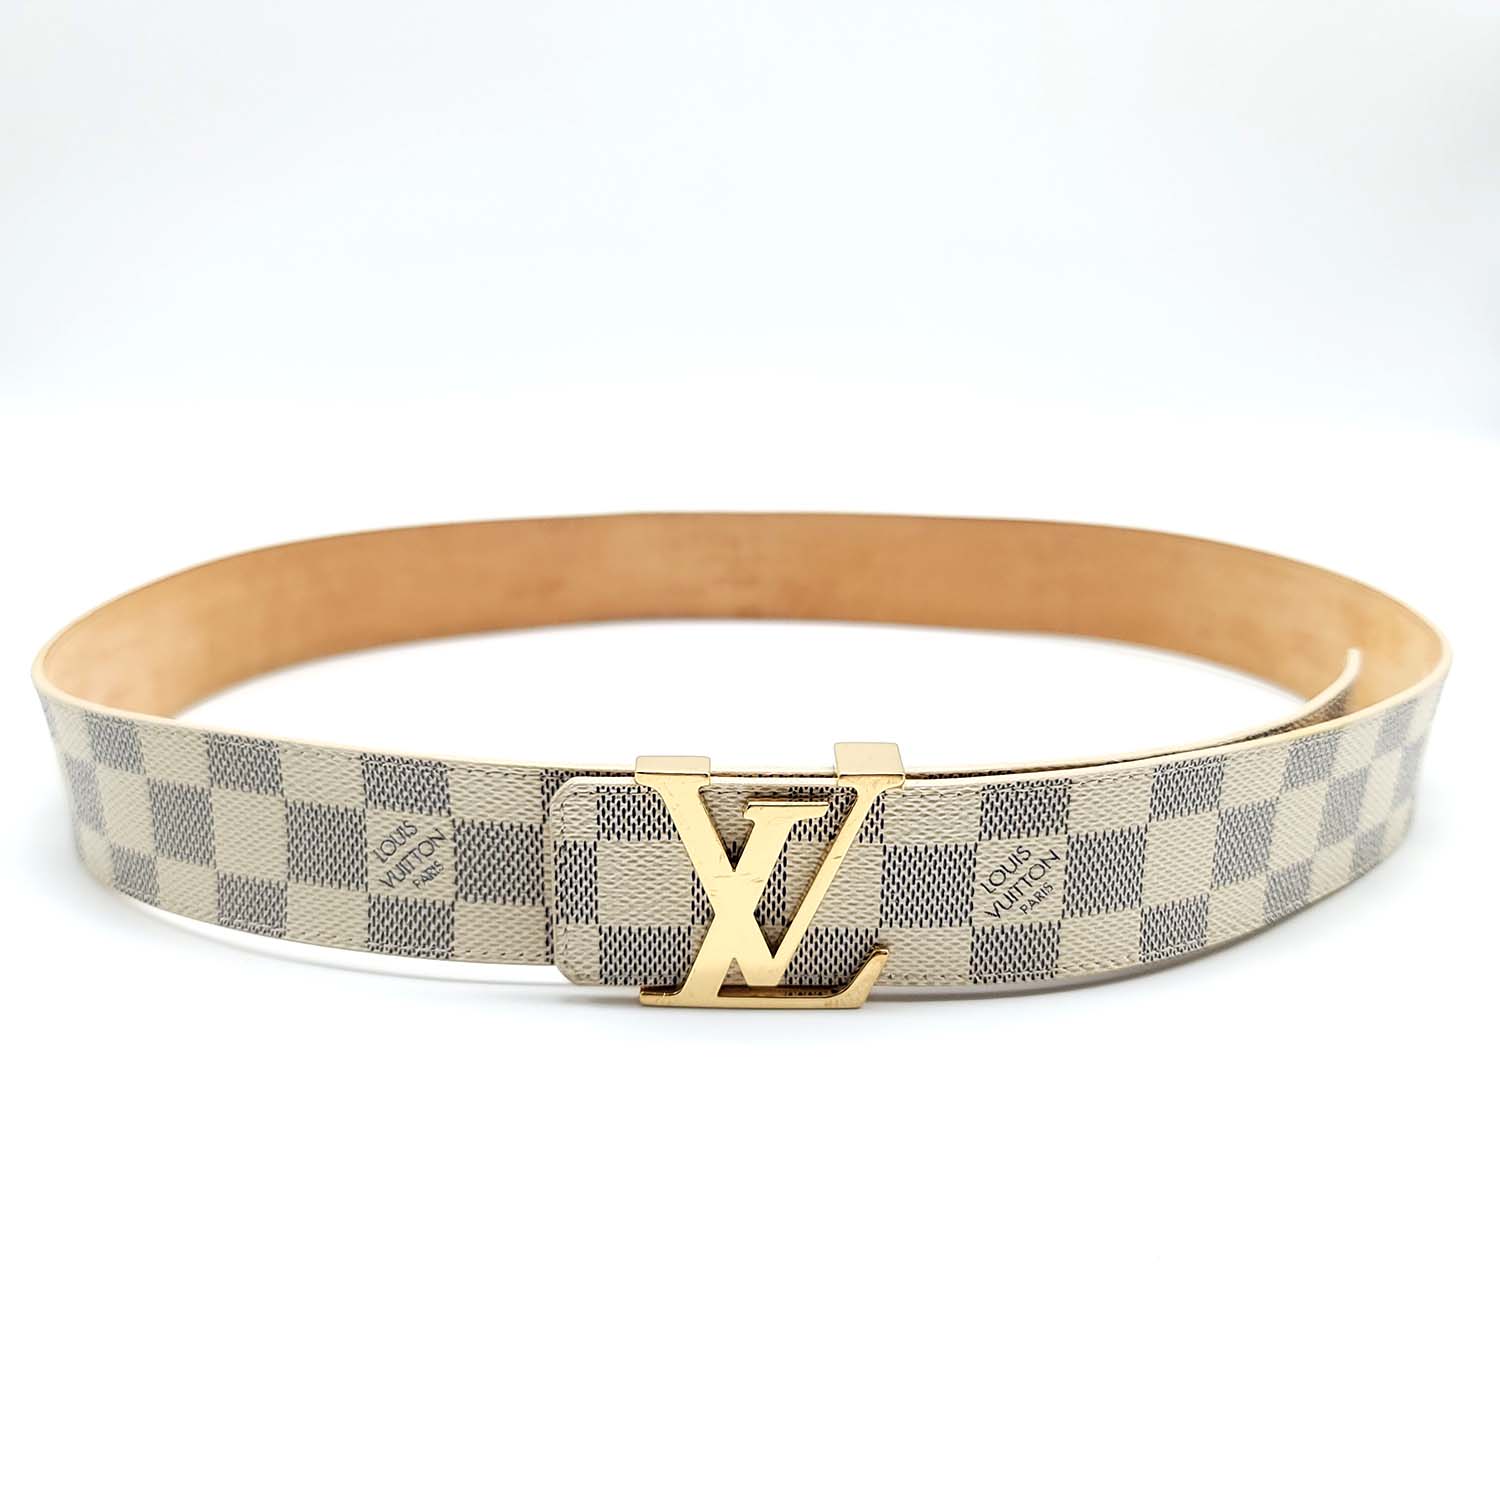 Louis+Vuitton+Damier+Azur+Belt+Size+110%2F44+40mm+Buckle+100+